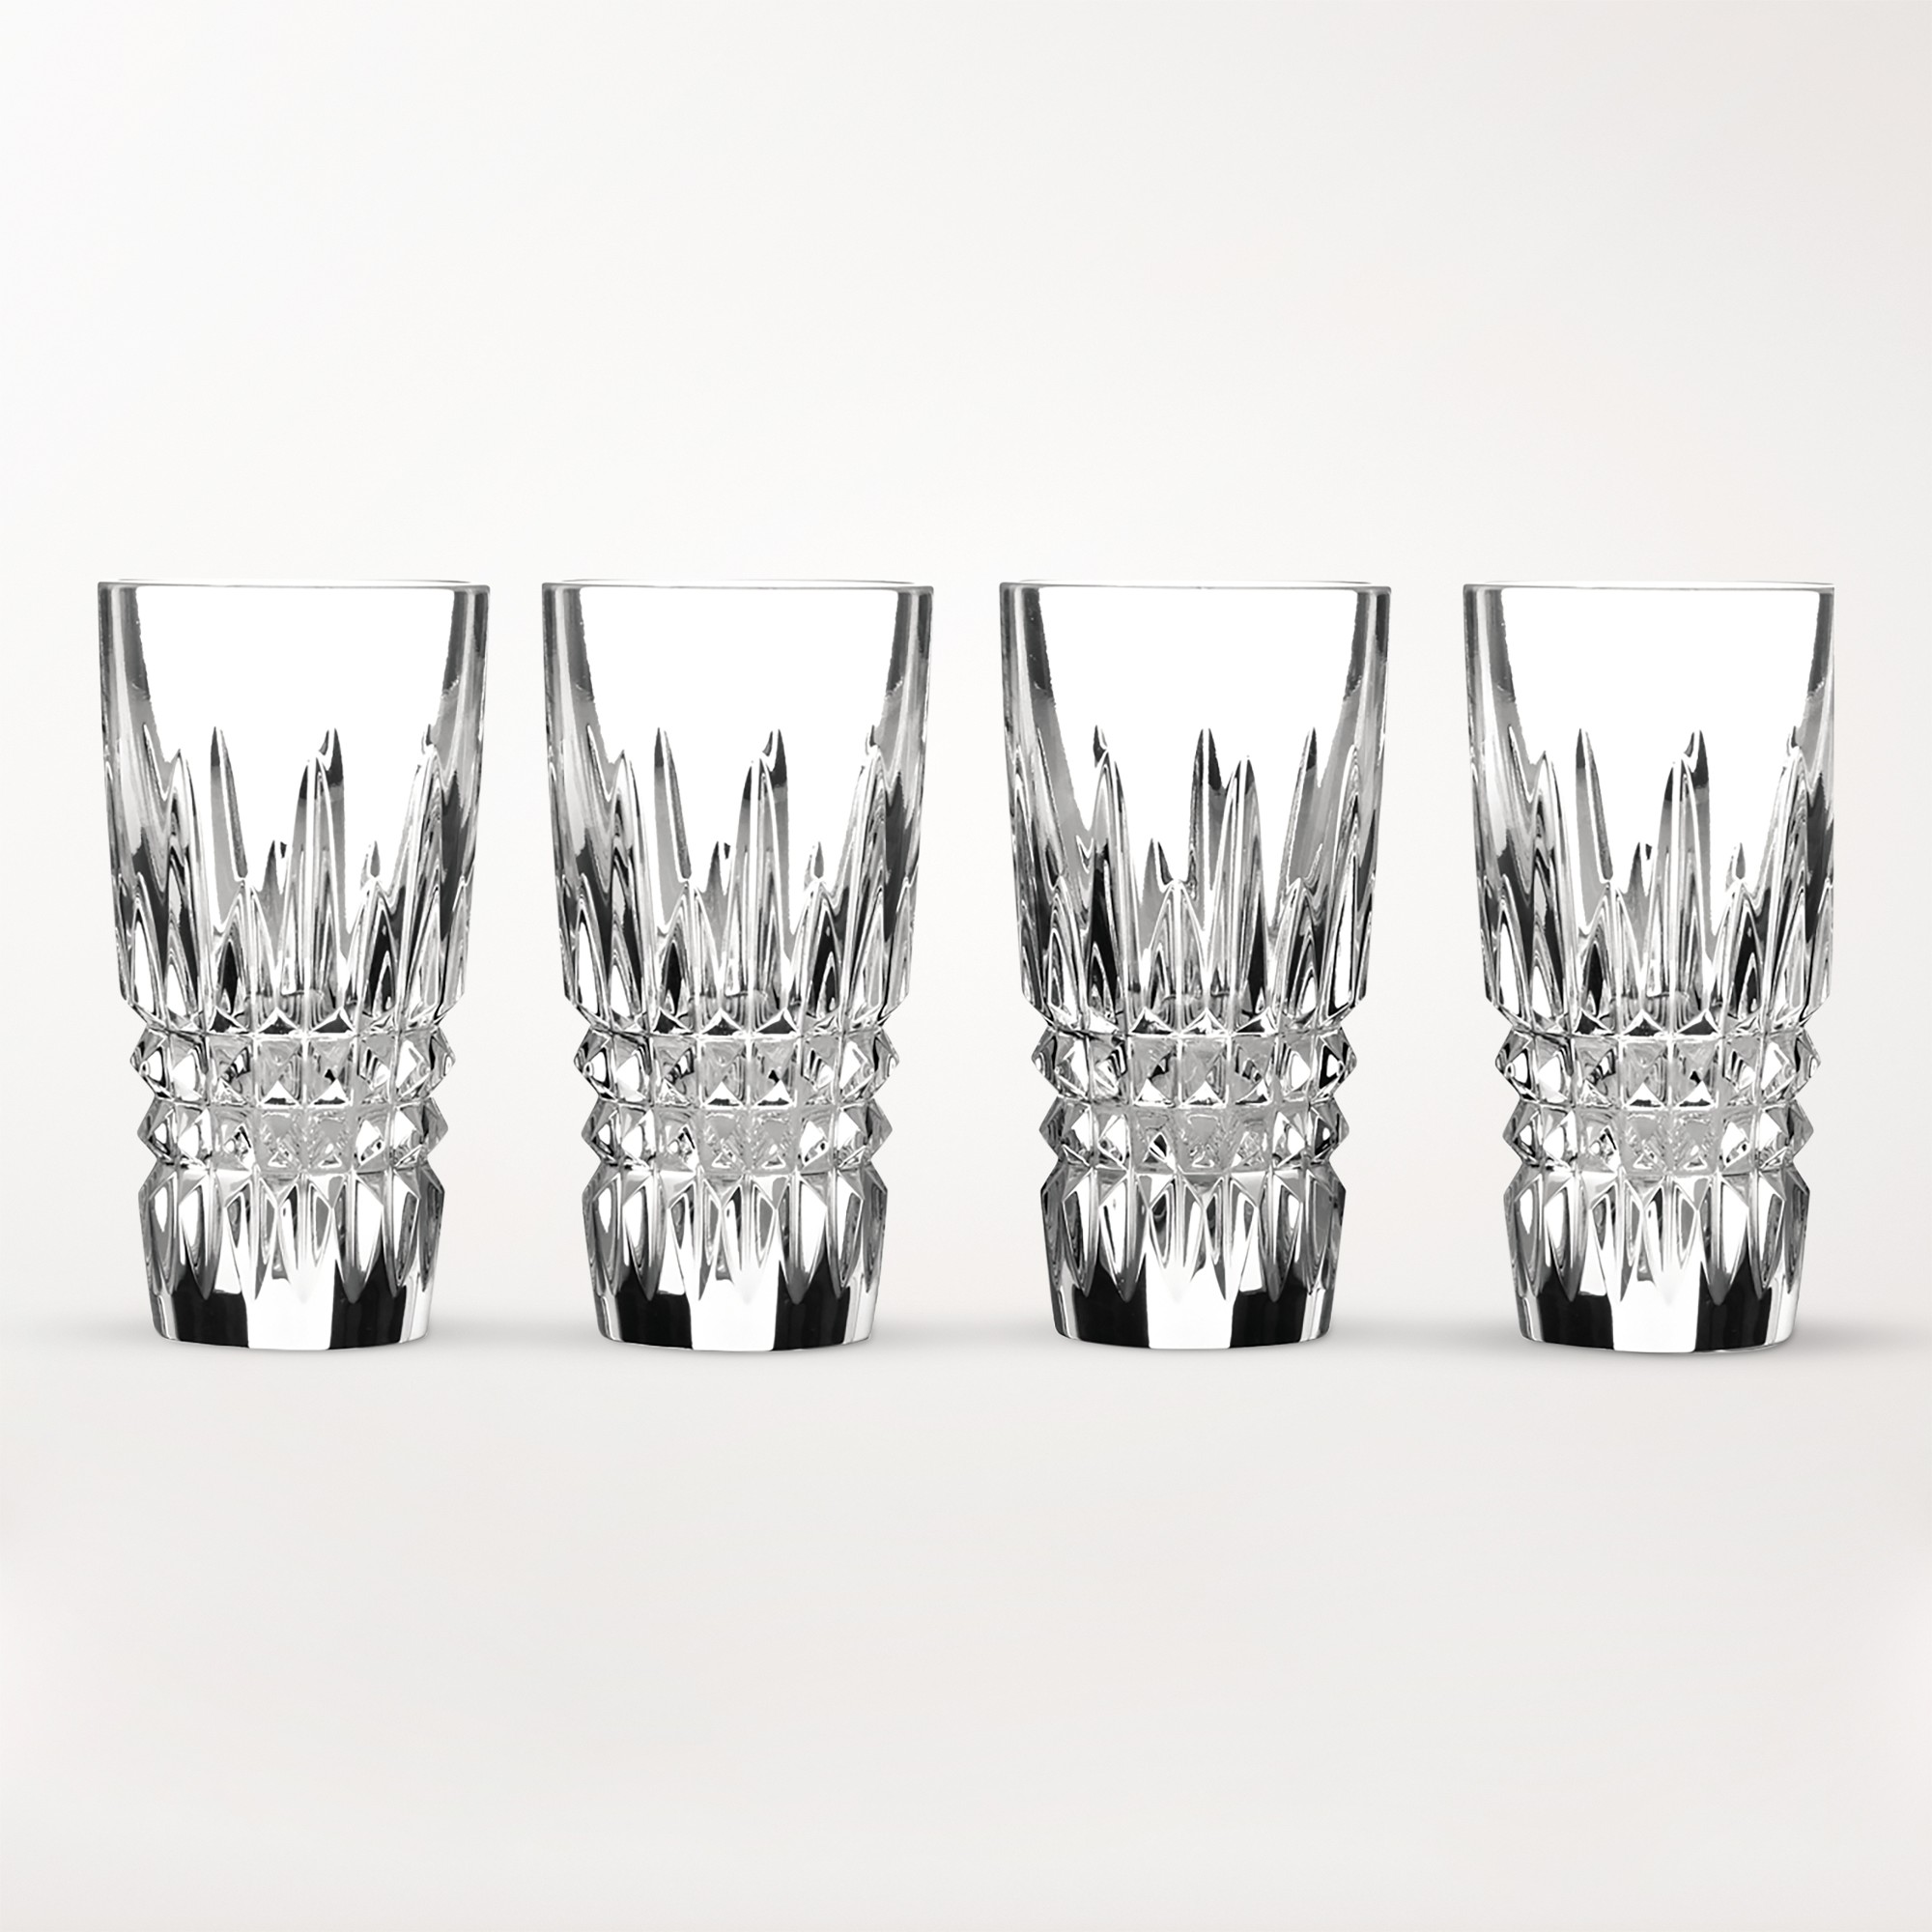 Waterford Lismore Diamond Shot Glasses, Set of 4